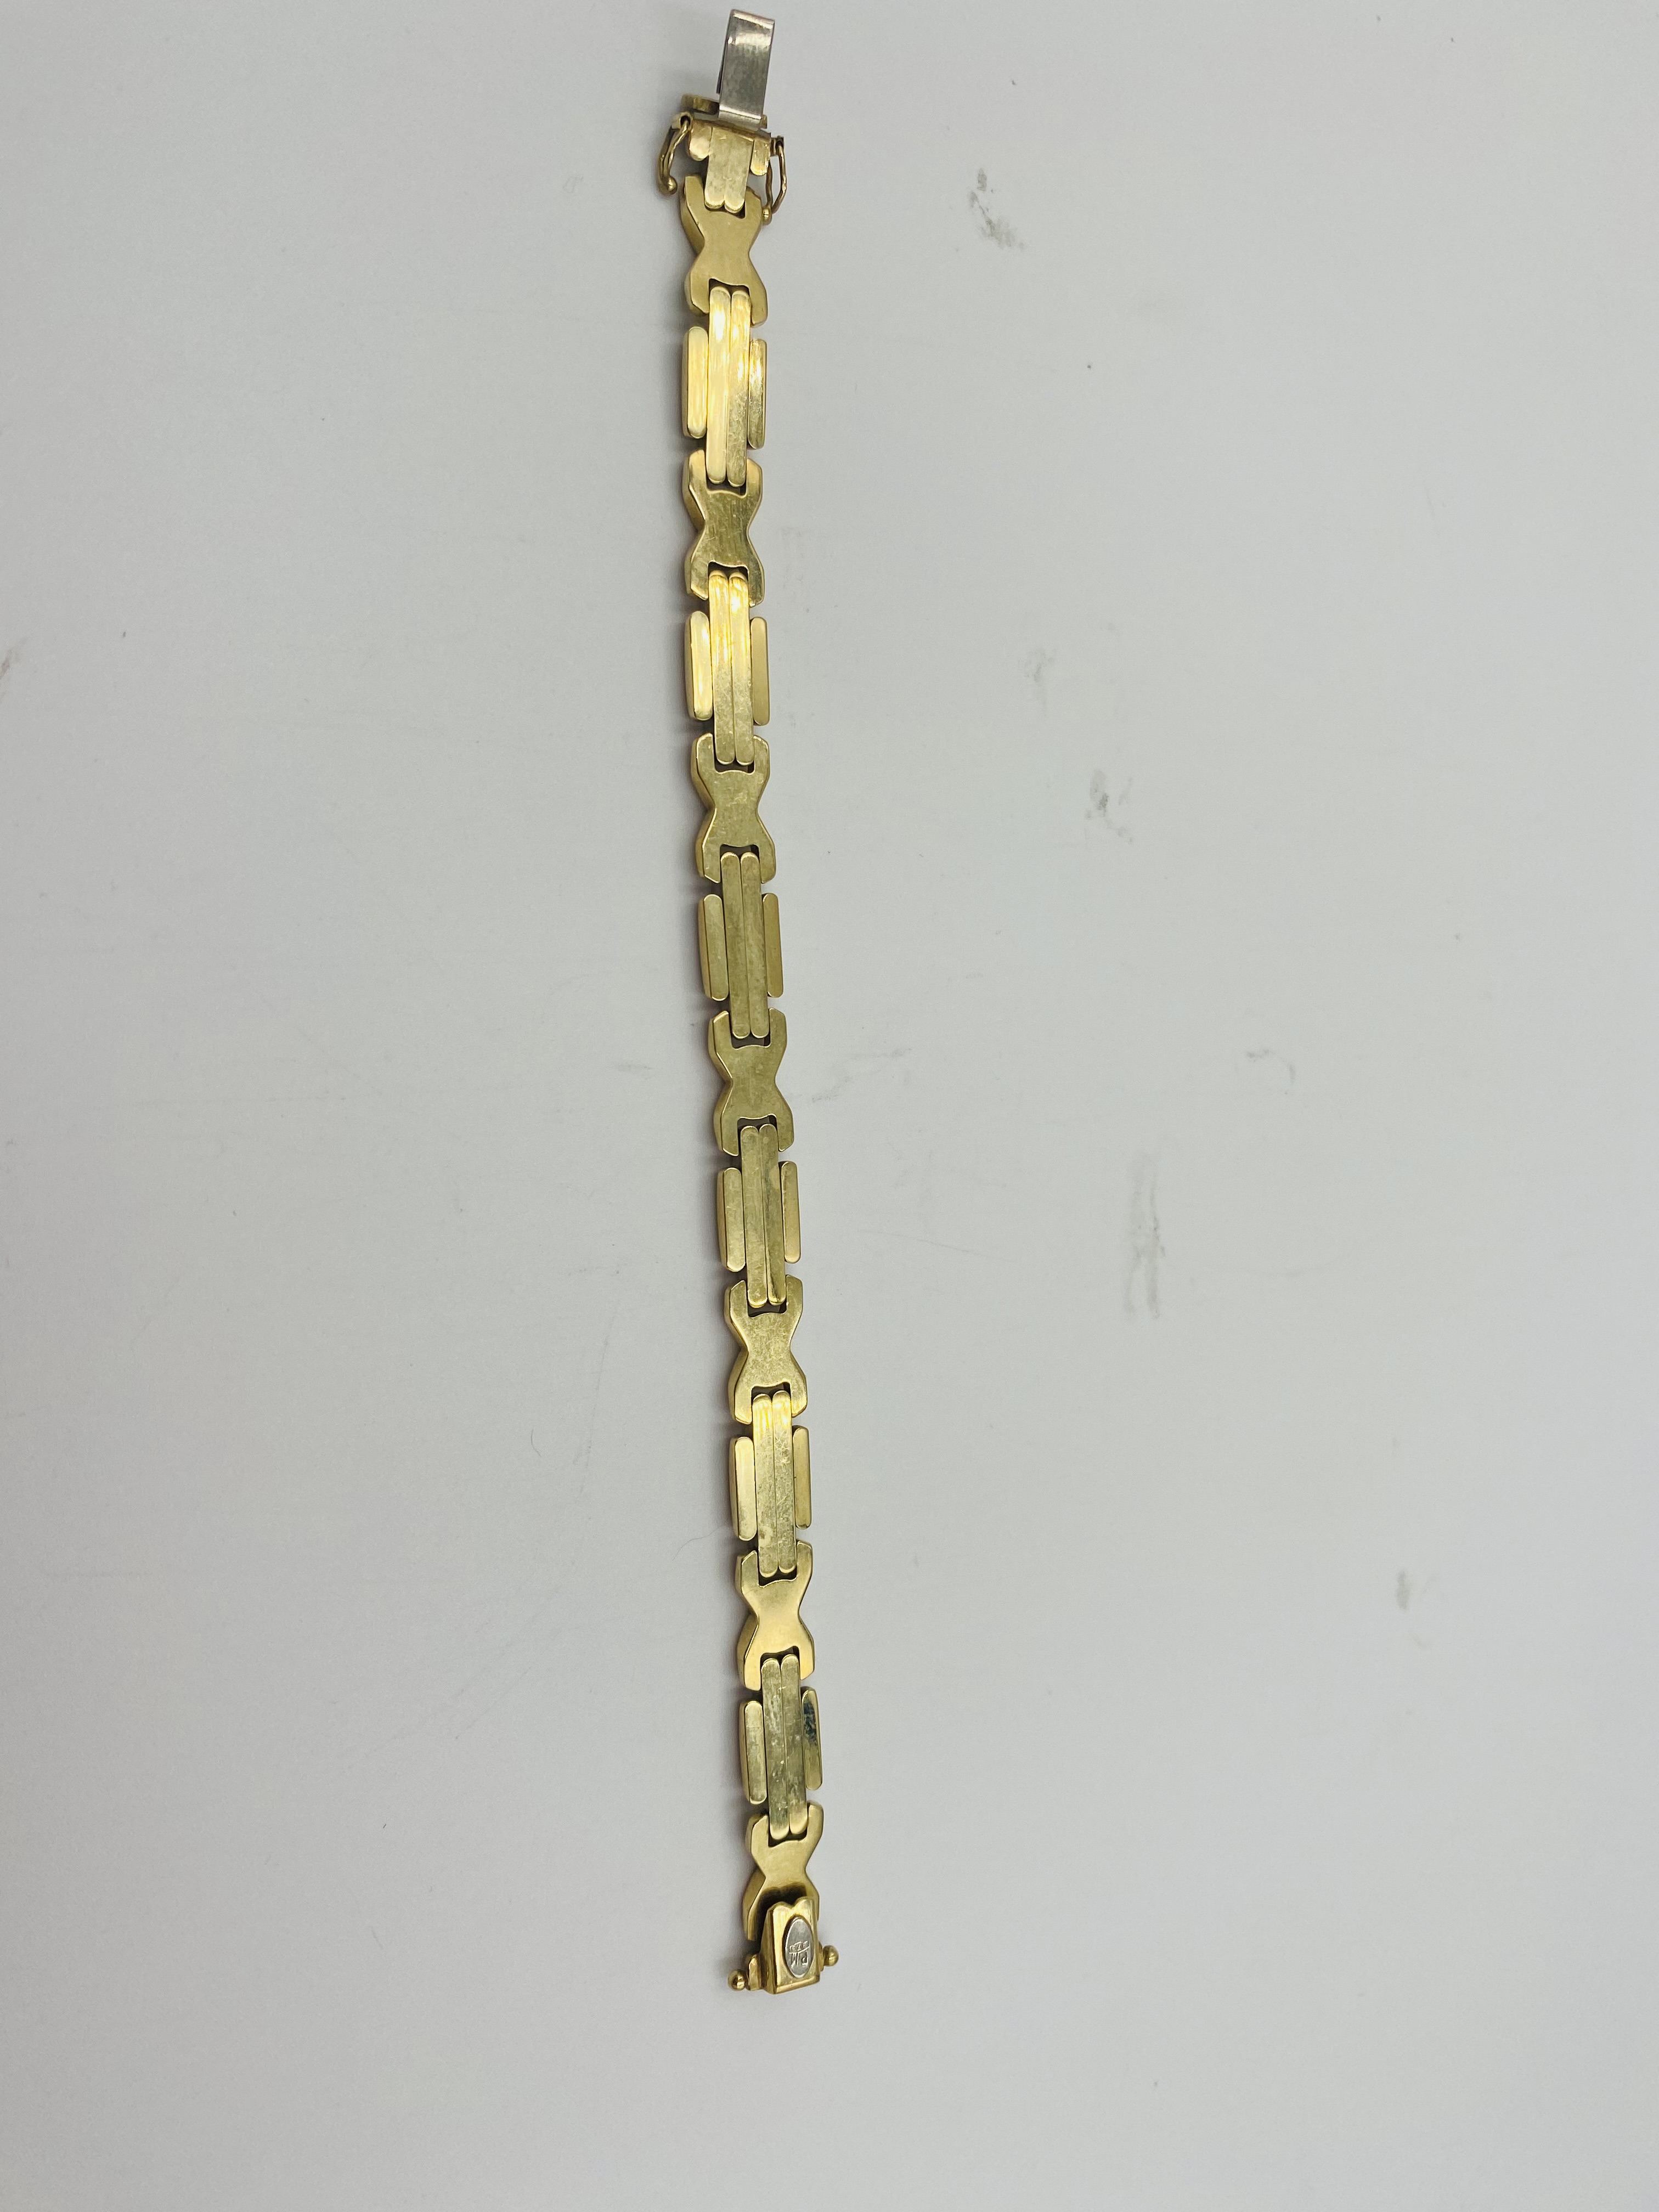 9ct gold and platinum bracelet - Image 2 of 5